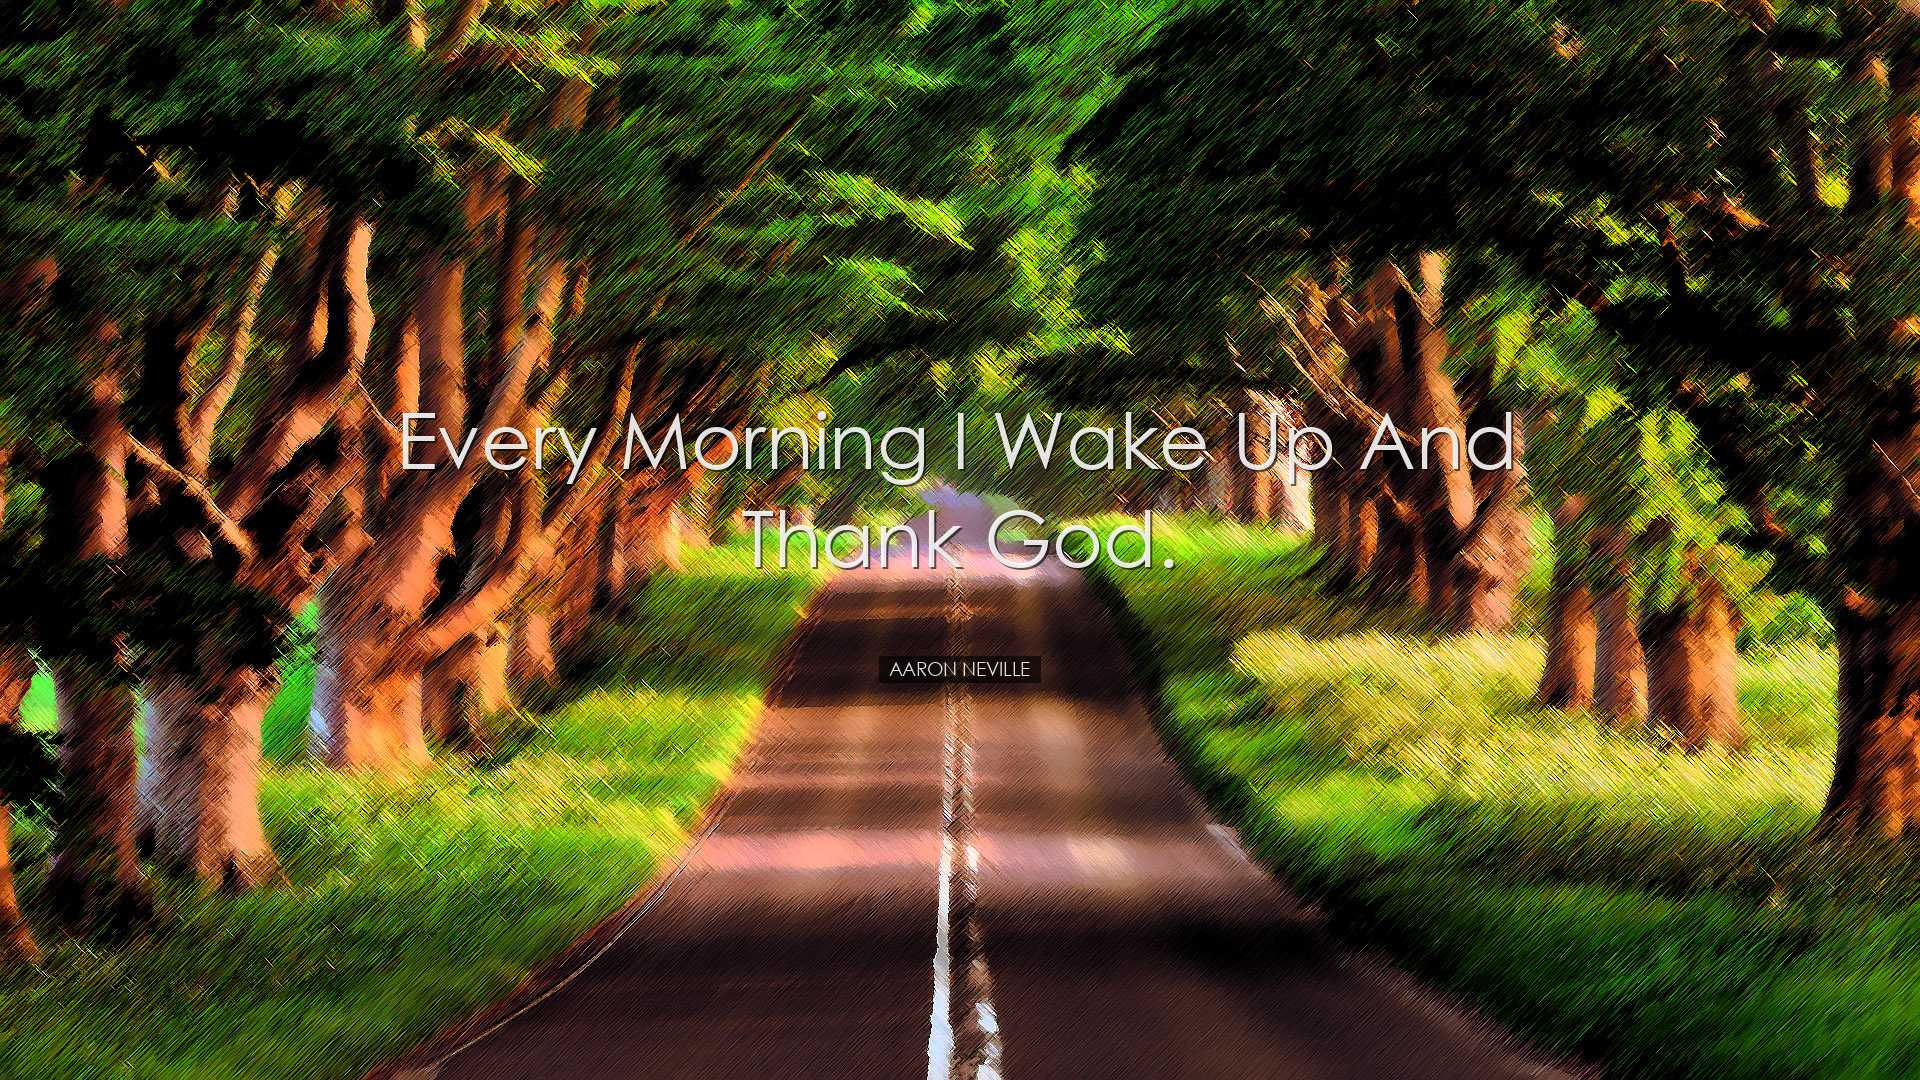 Every morning I wake up and thank God. - Aaron Neville